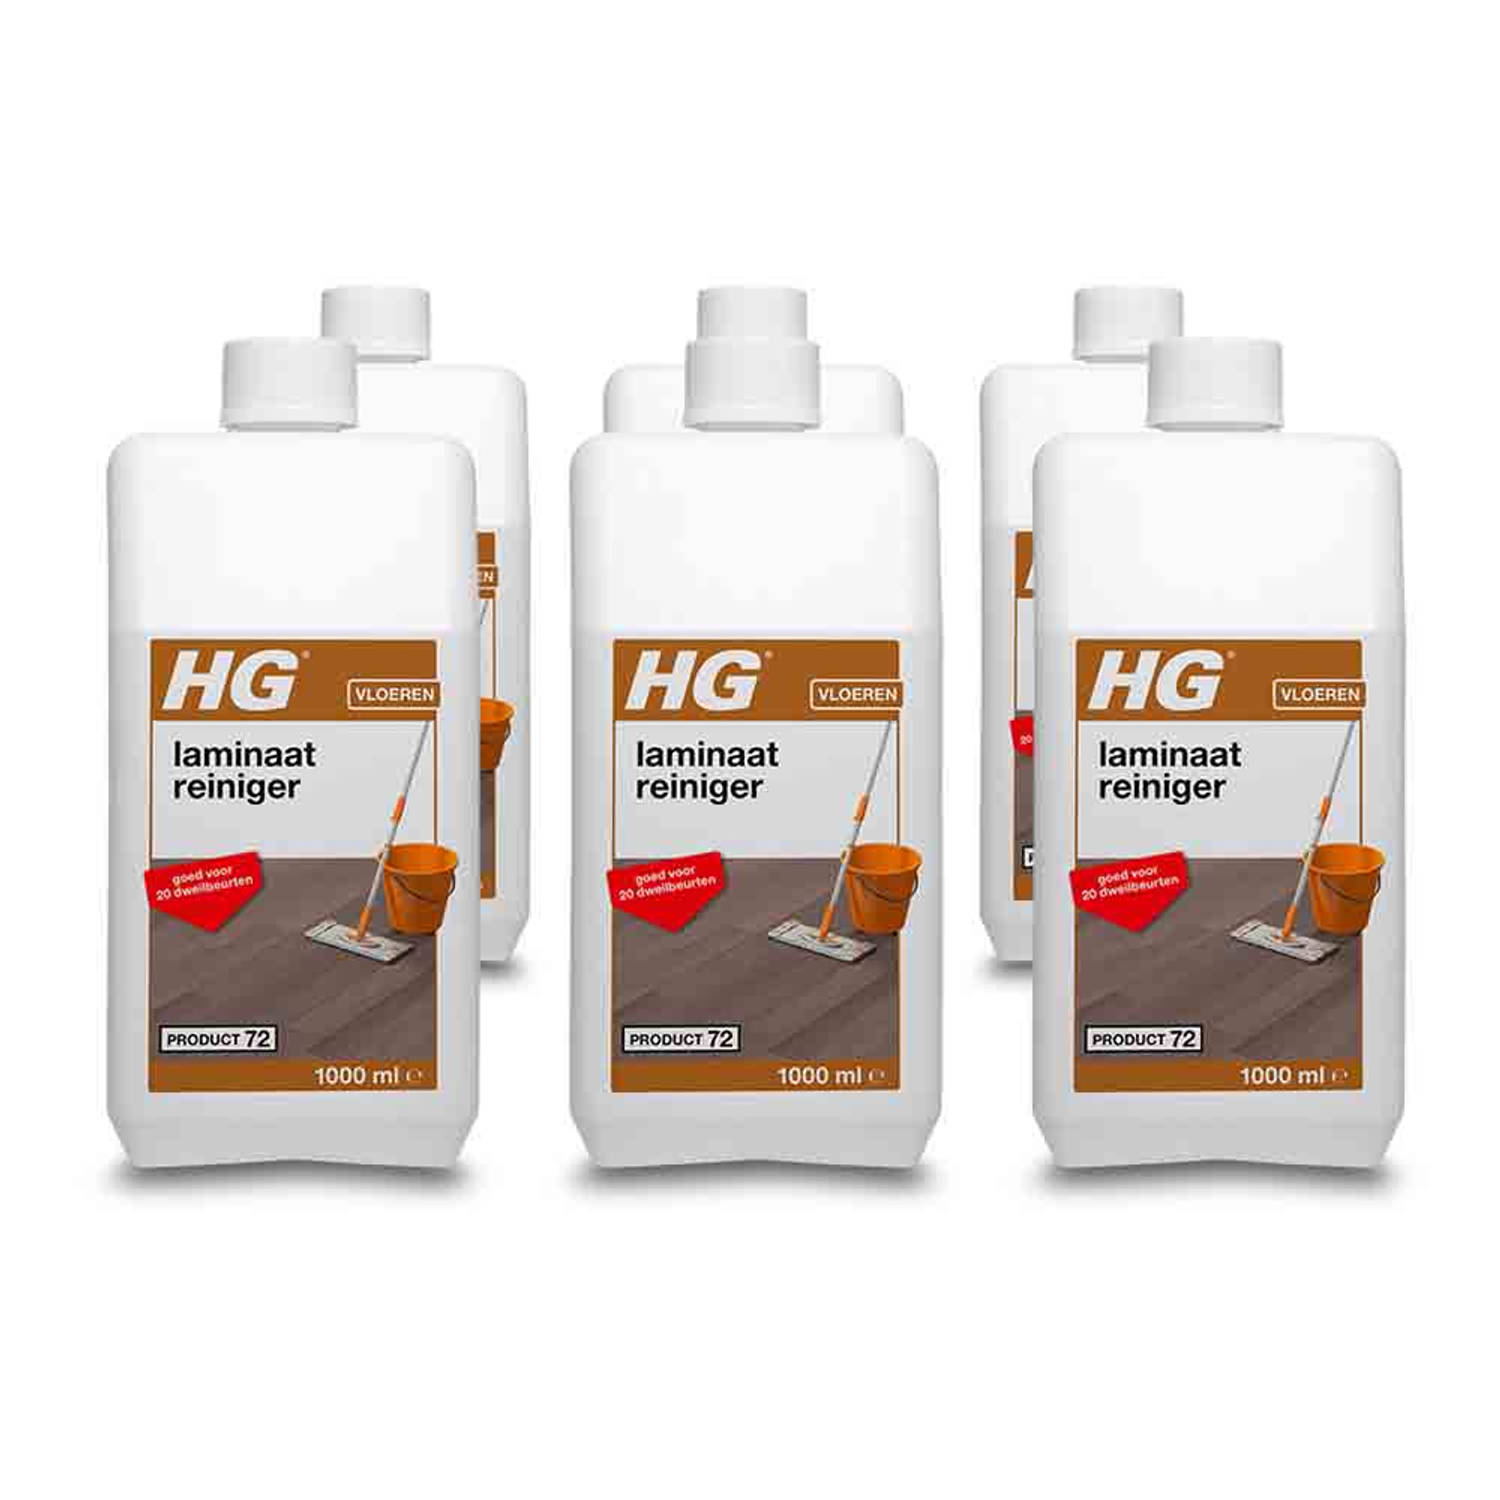 HG laminaatreiniger 1 L - 6 stuks